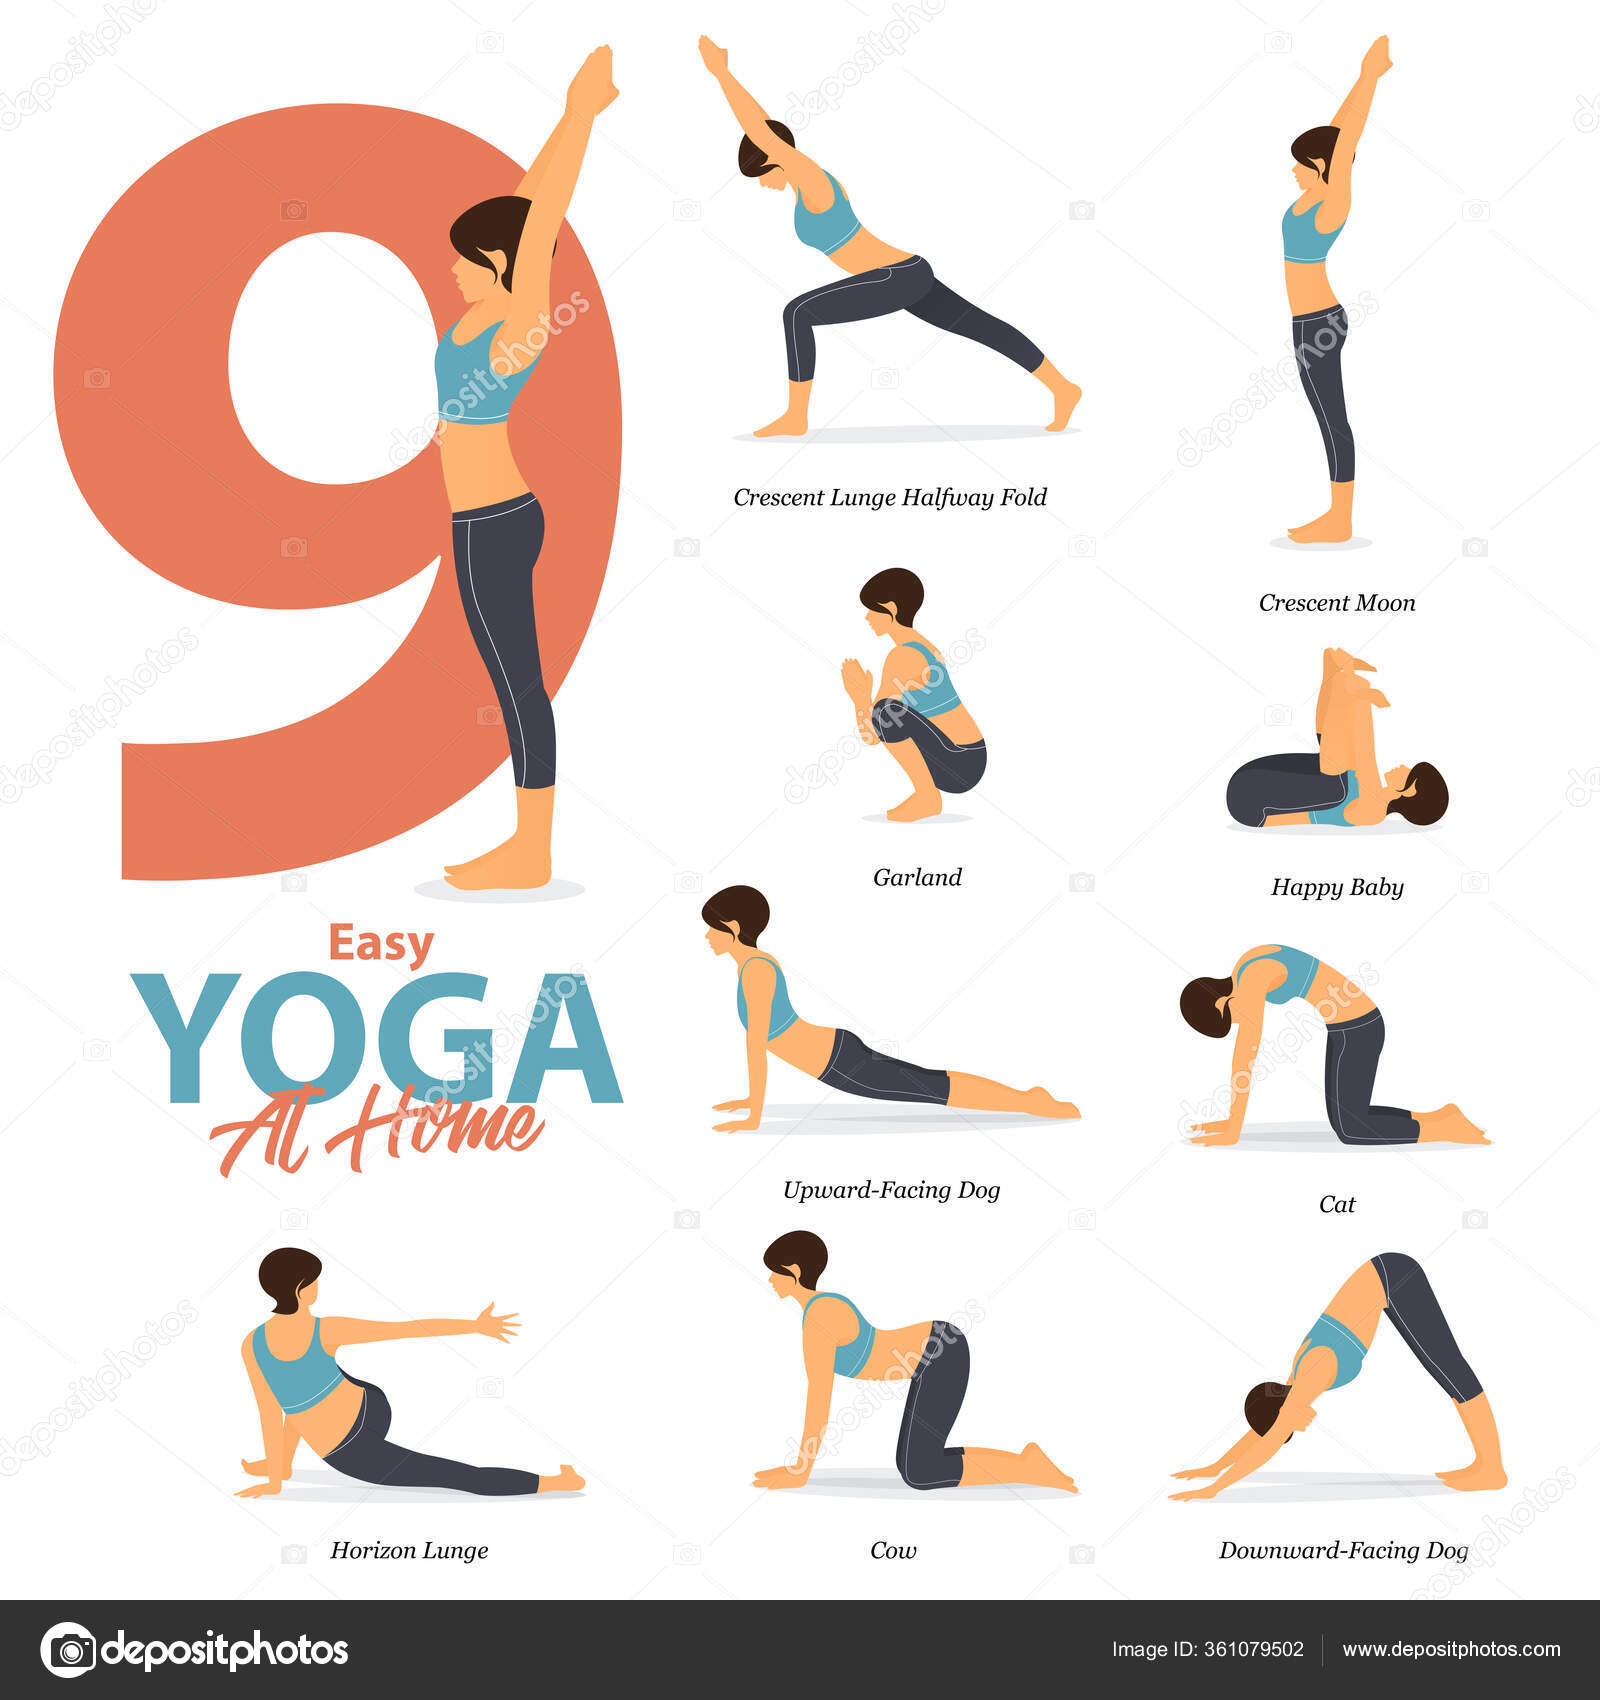 yoga pose. Line drawing. Healthy life concept... - Stock Illustration  [85228477] - PIXTA